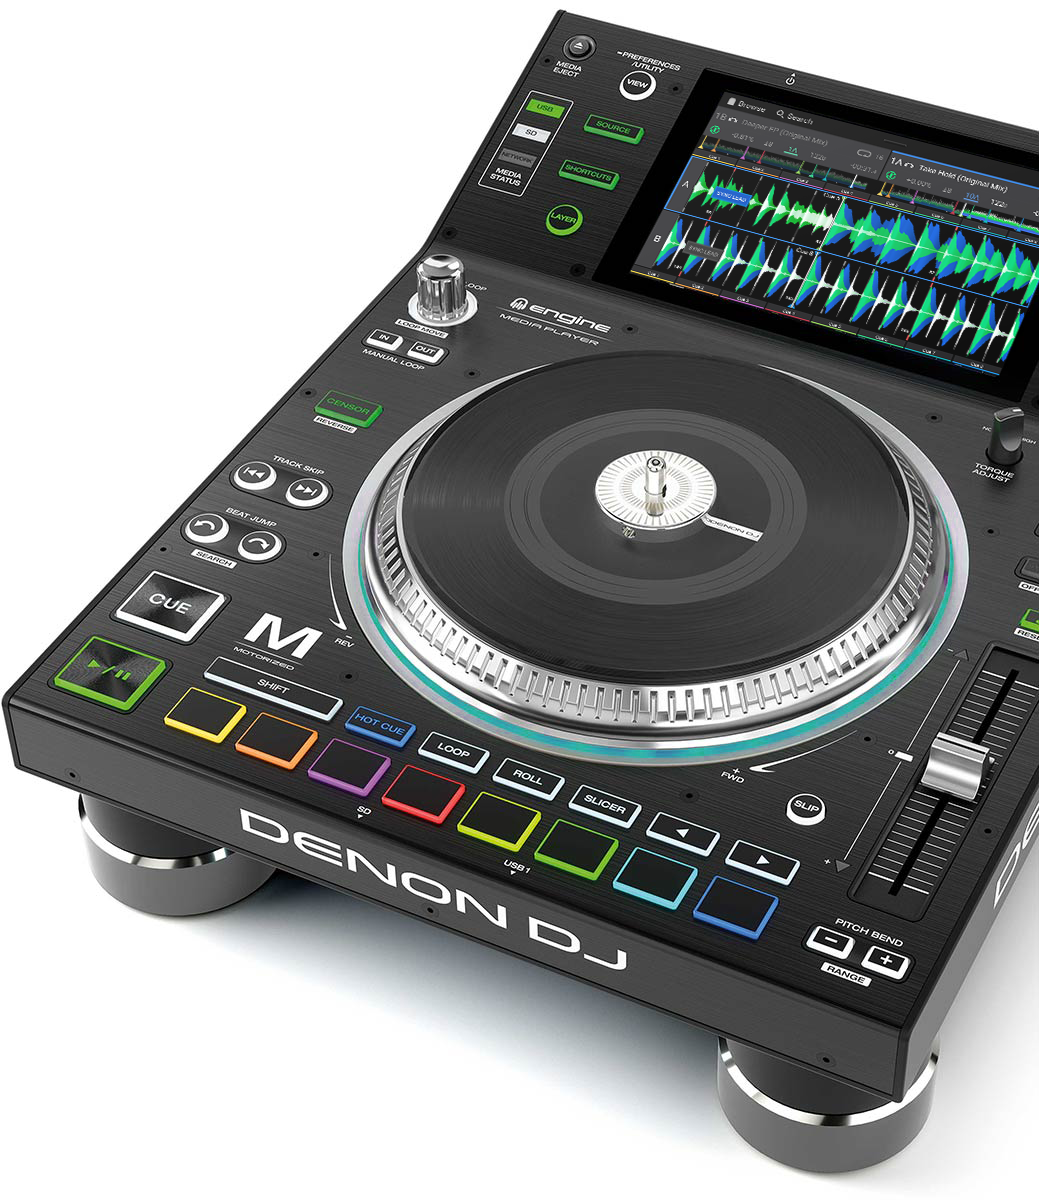 Professional Motorized DJ Media Player | SC5000M PRIME | Denon DJ